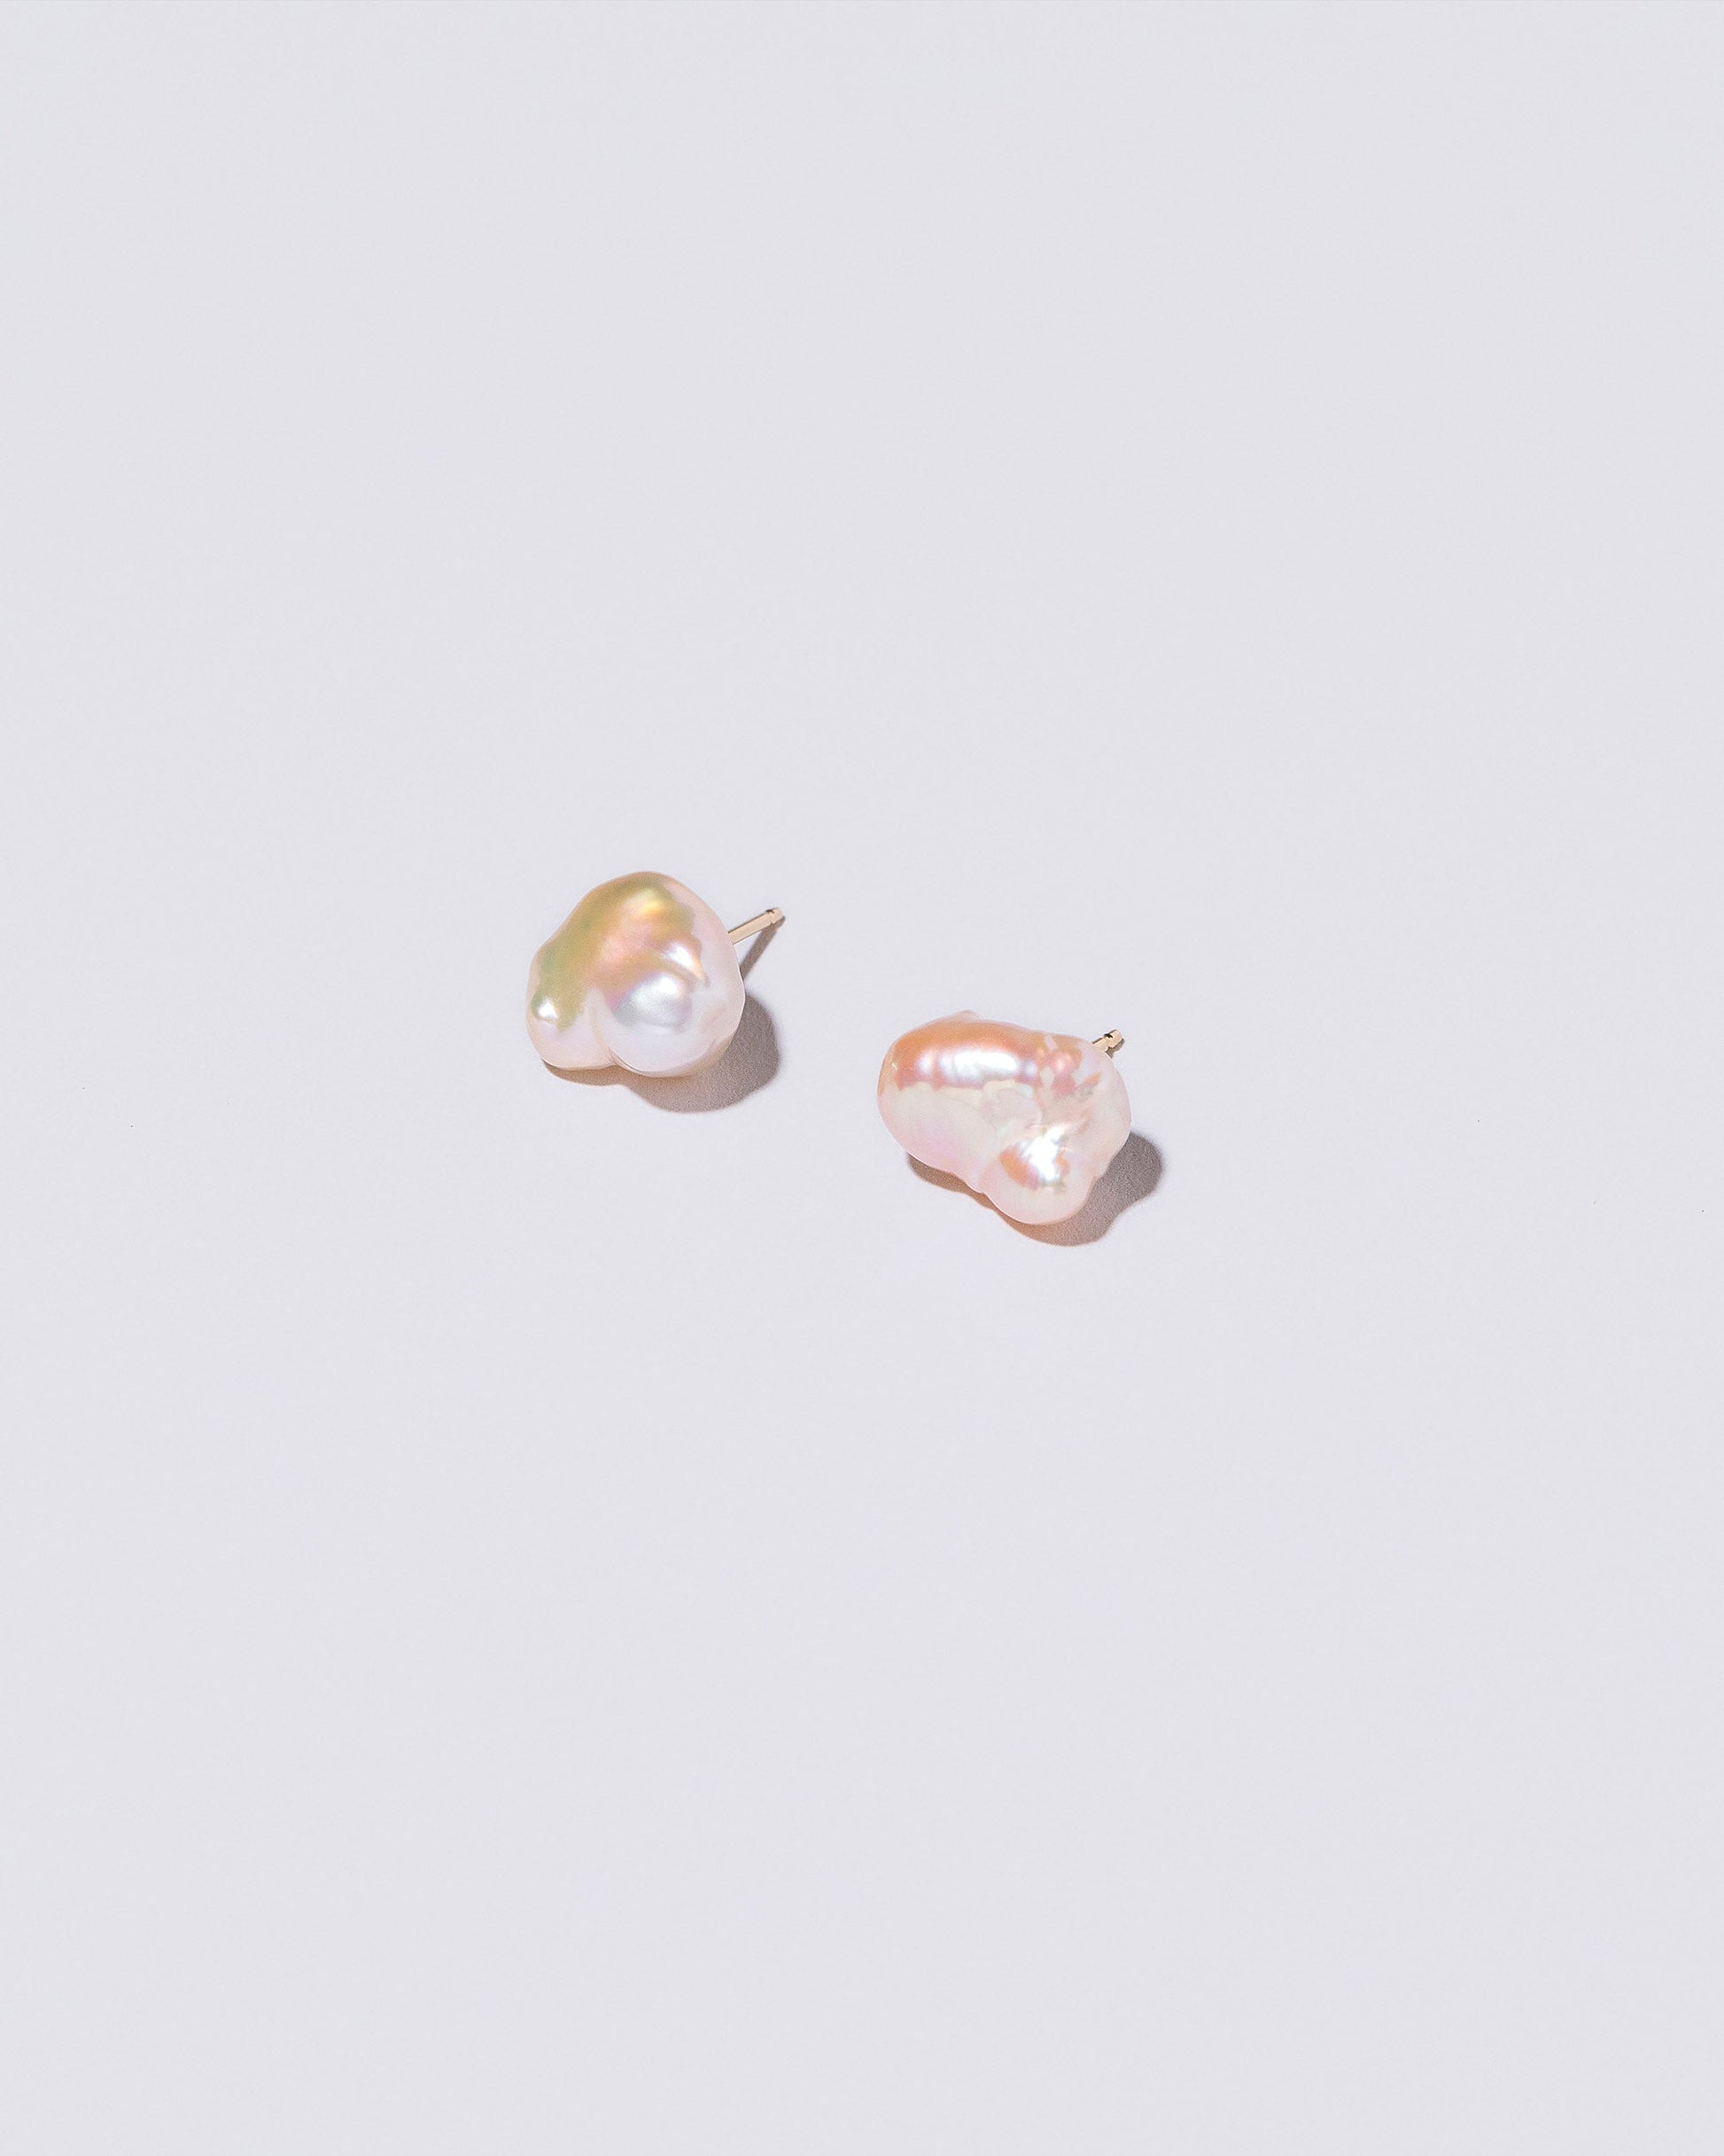  Lagniappe Pearl Stud Earrings on light color background.